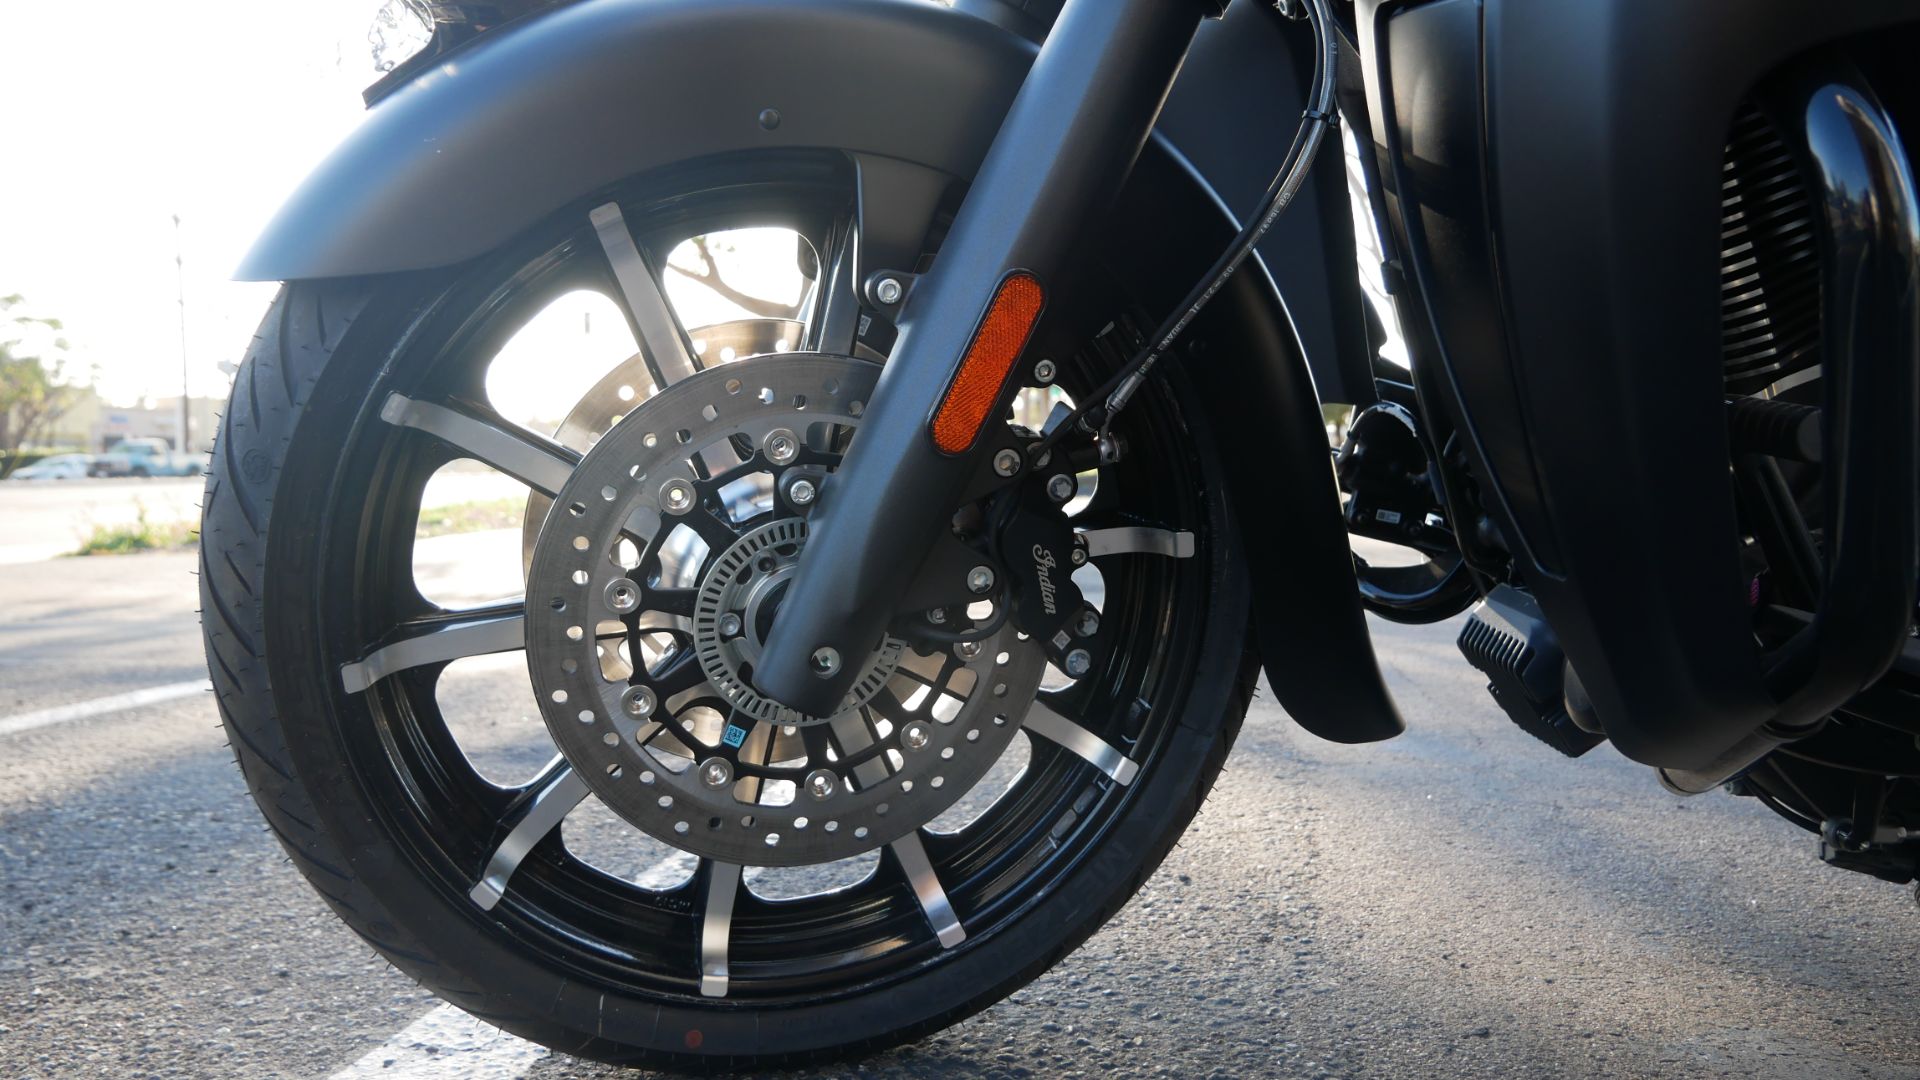 2022 Indian Motorcycle Roadmaster® Dark Horse® in San Diego, California - Photo 11